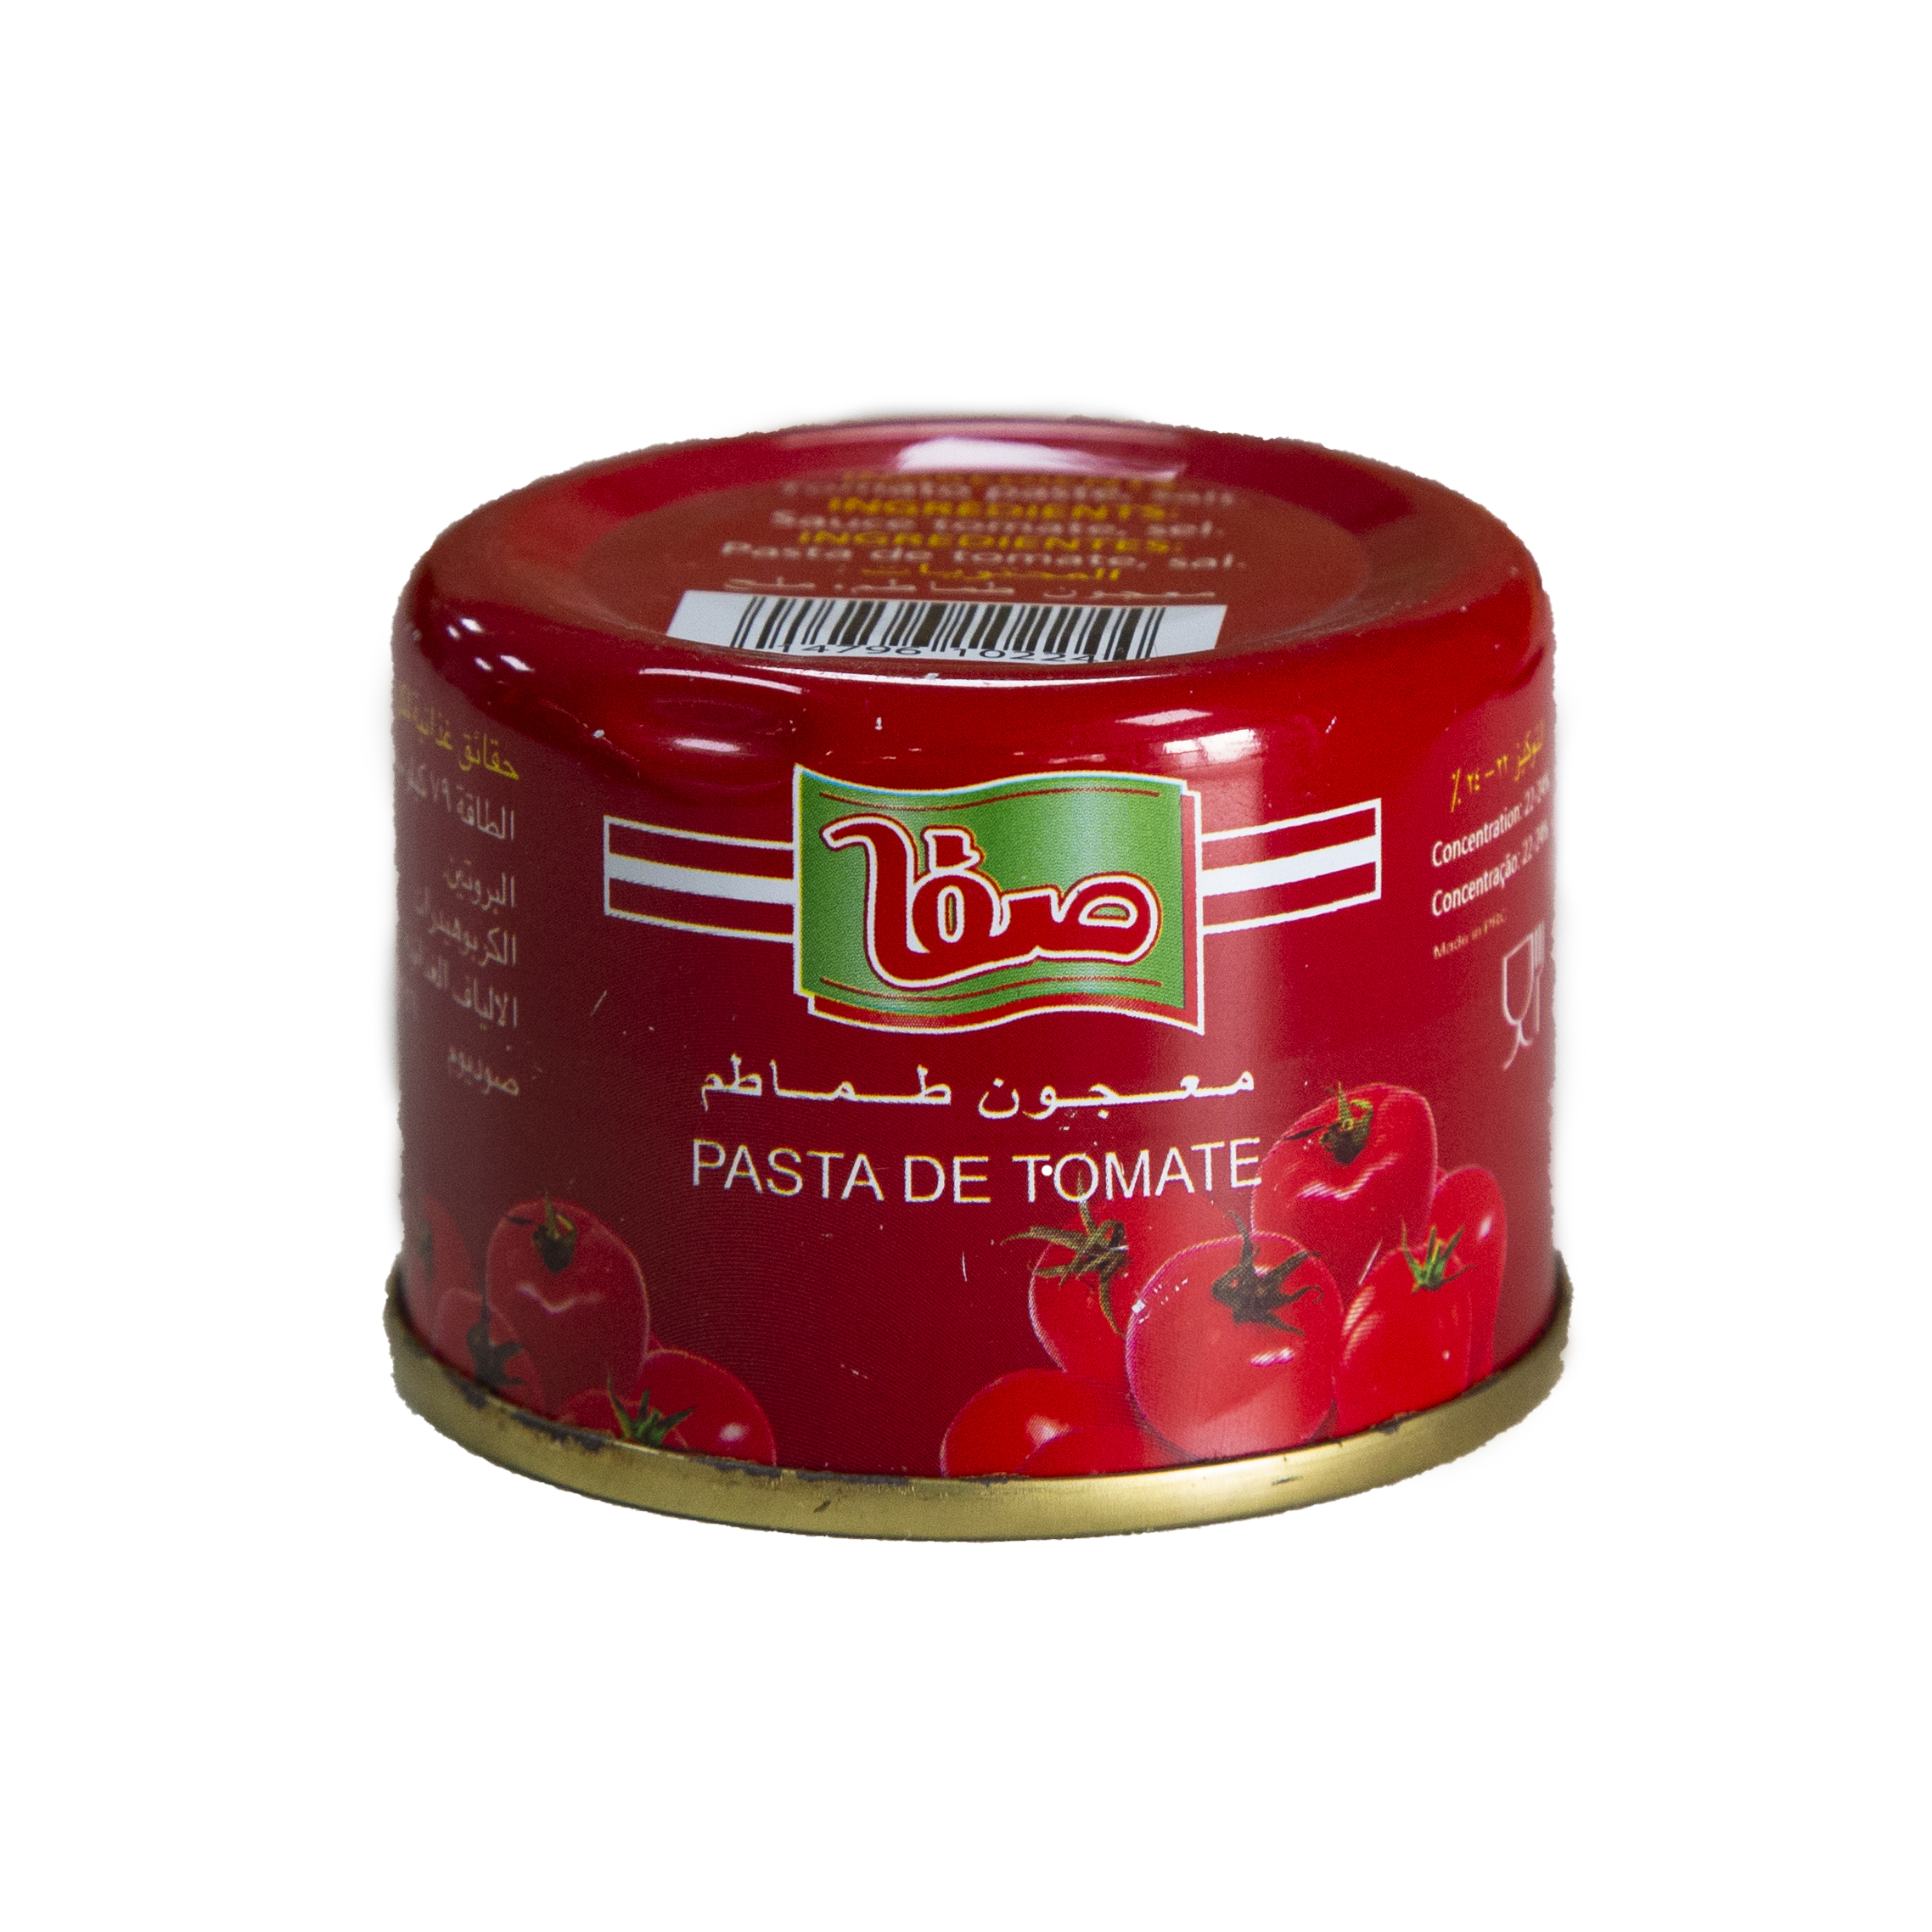 70g tin tomatenpasta Brix 28% -30% Sineeske fiedselfabrikant fergees merkûntwerp